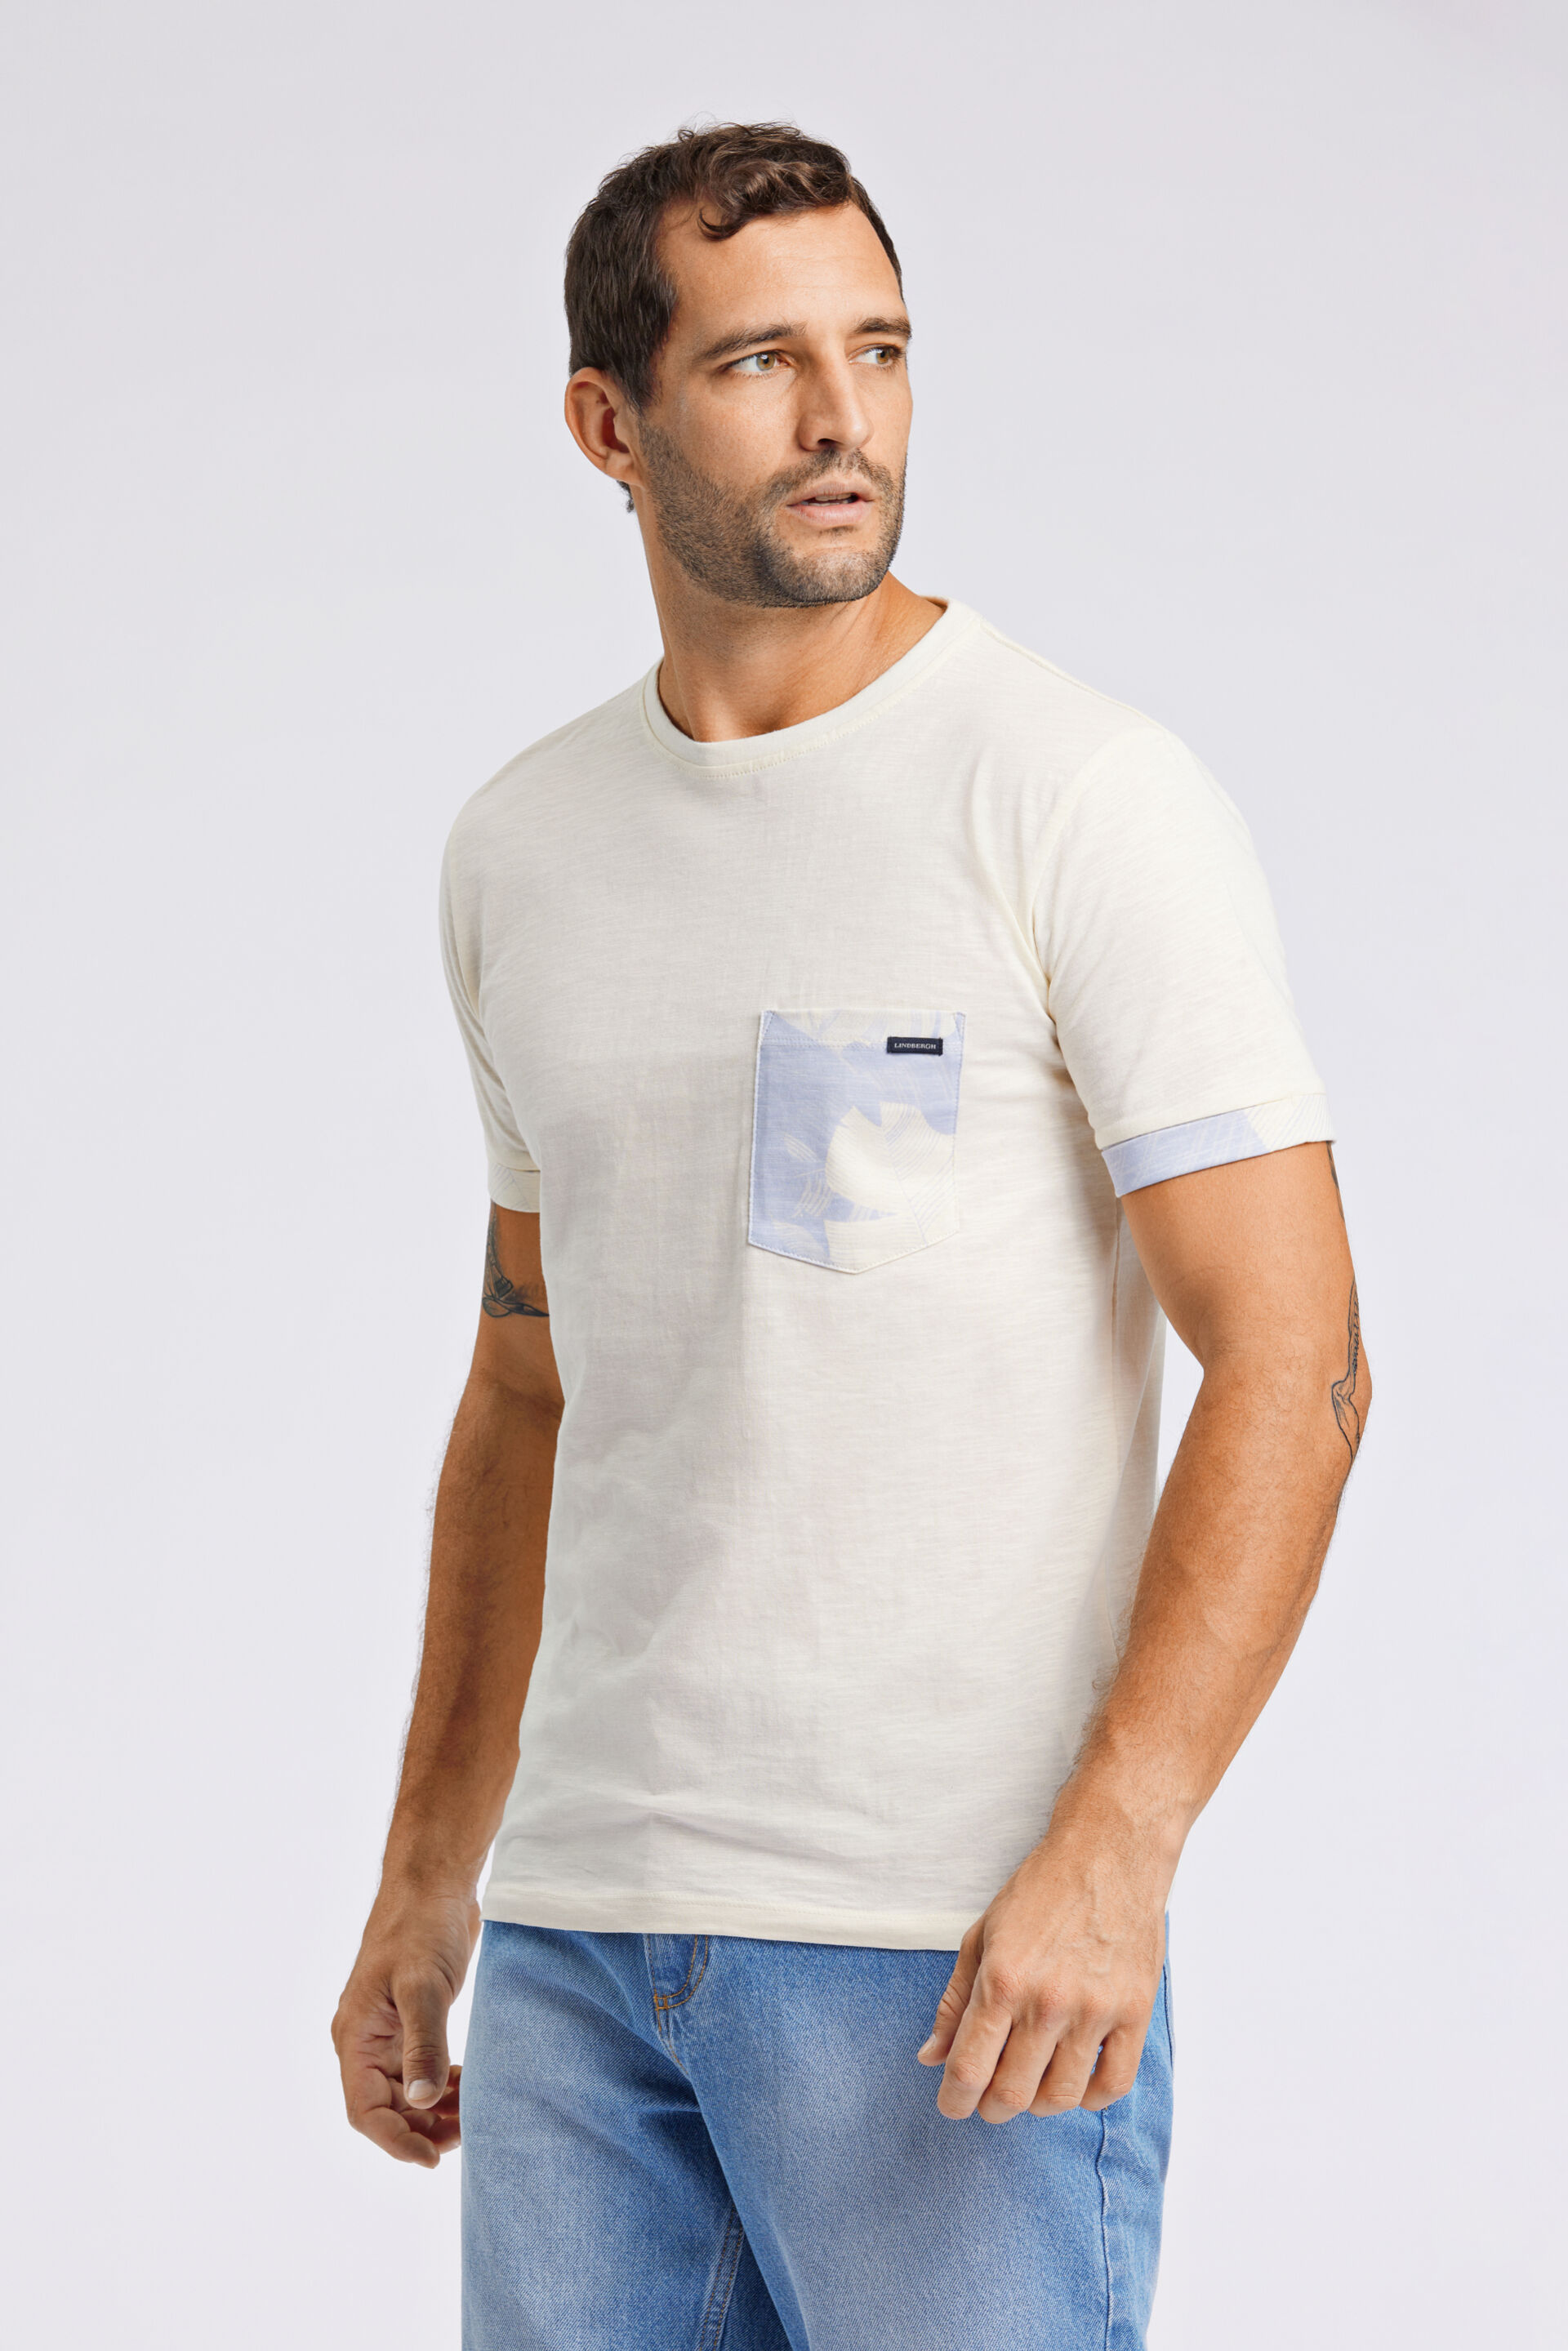 Lindbergh  T-shirt 30-420144